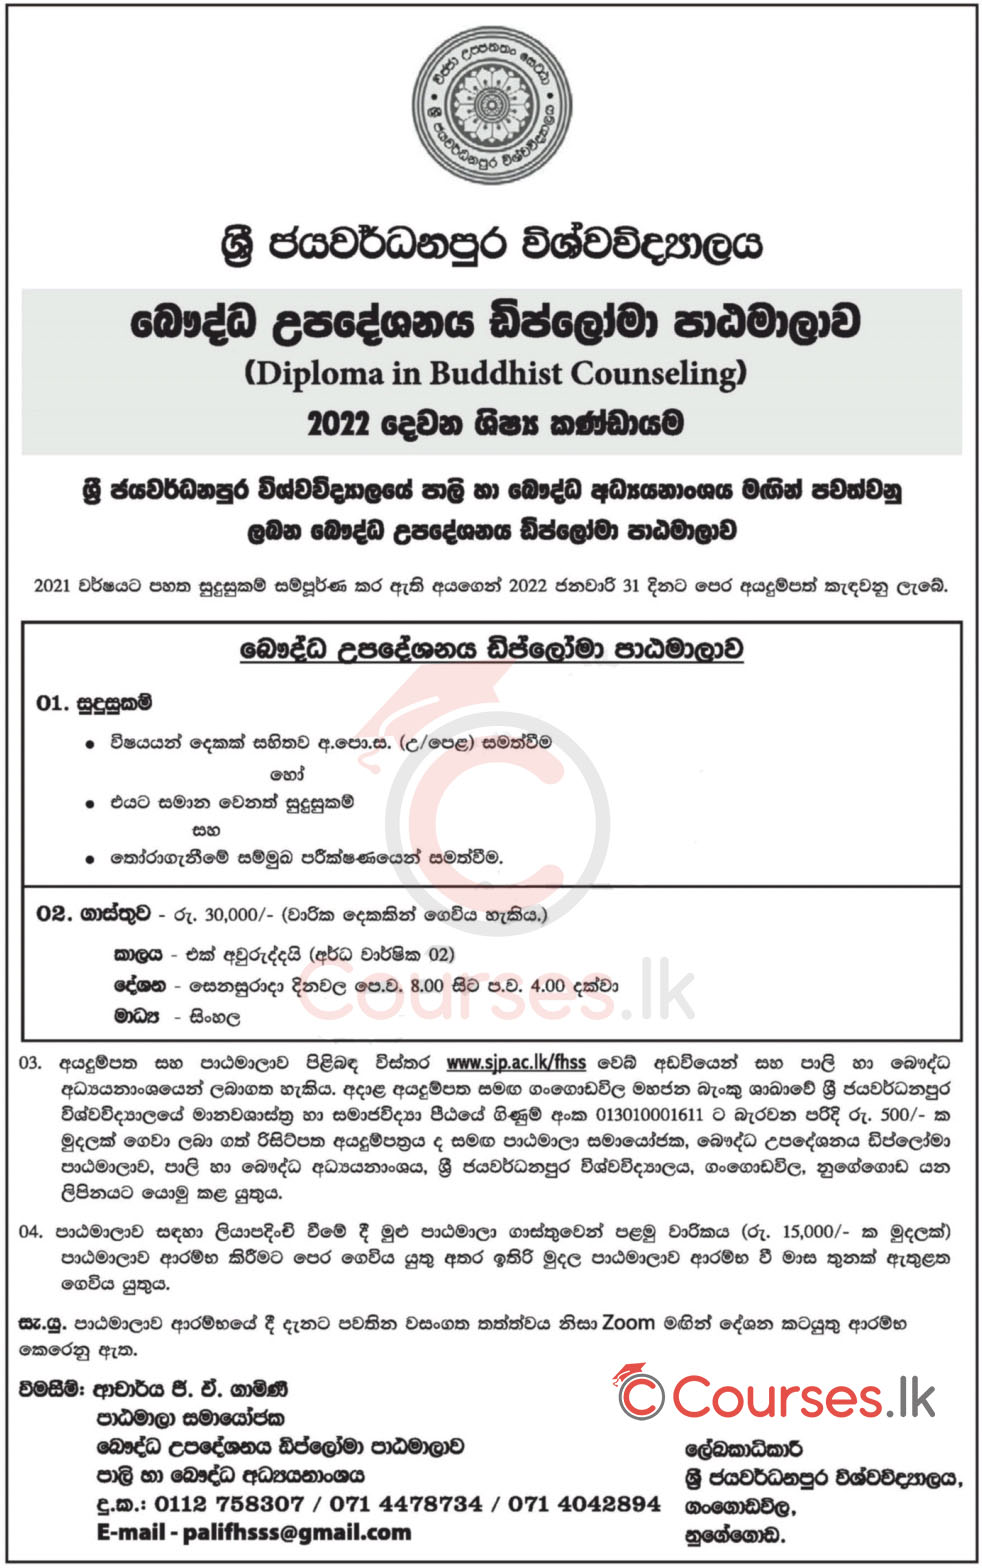 Diploma Course in Buddhist Counseling 2022 - University of Sri Jayewardenepura